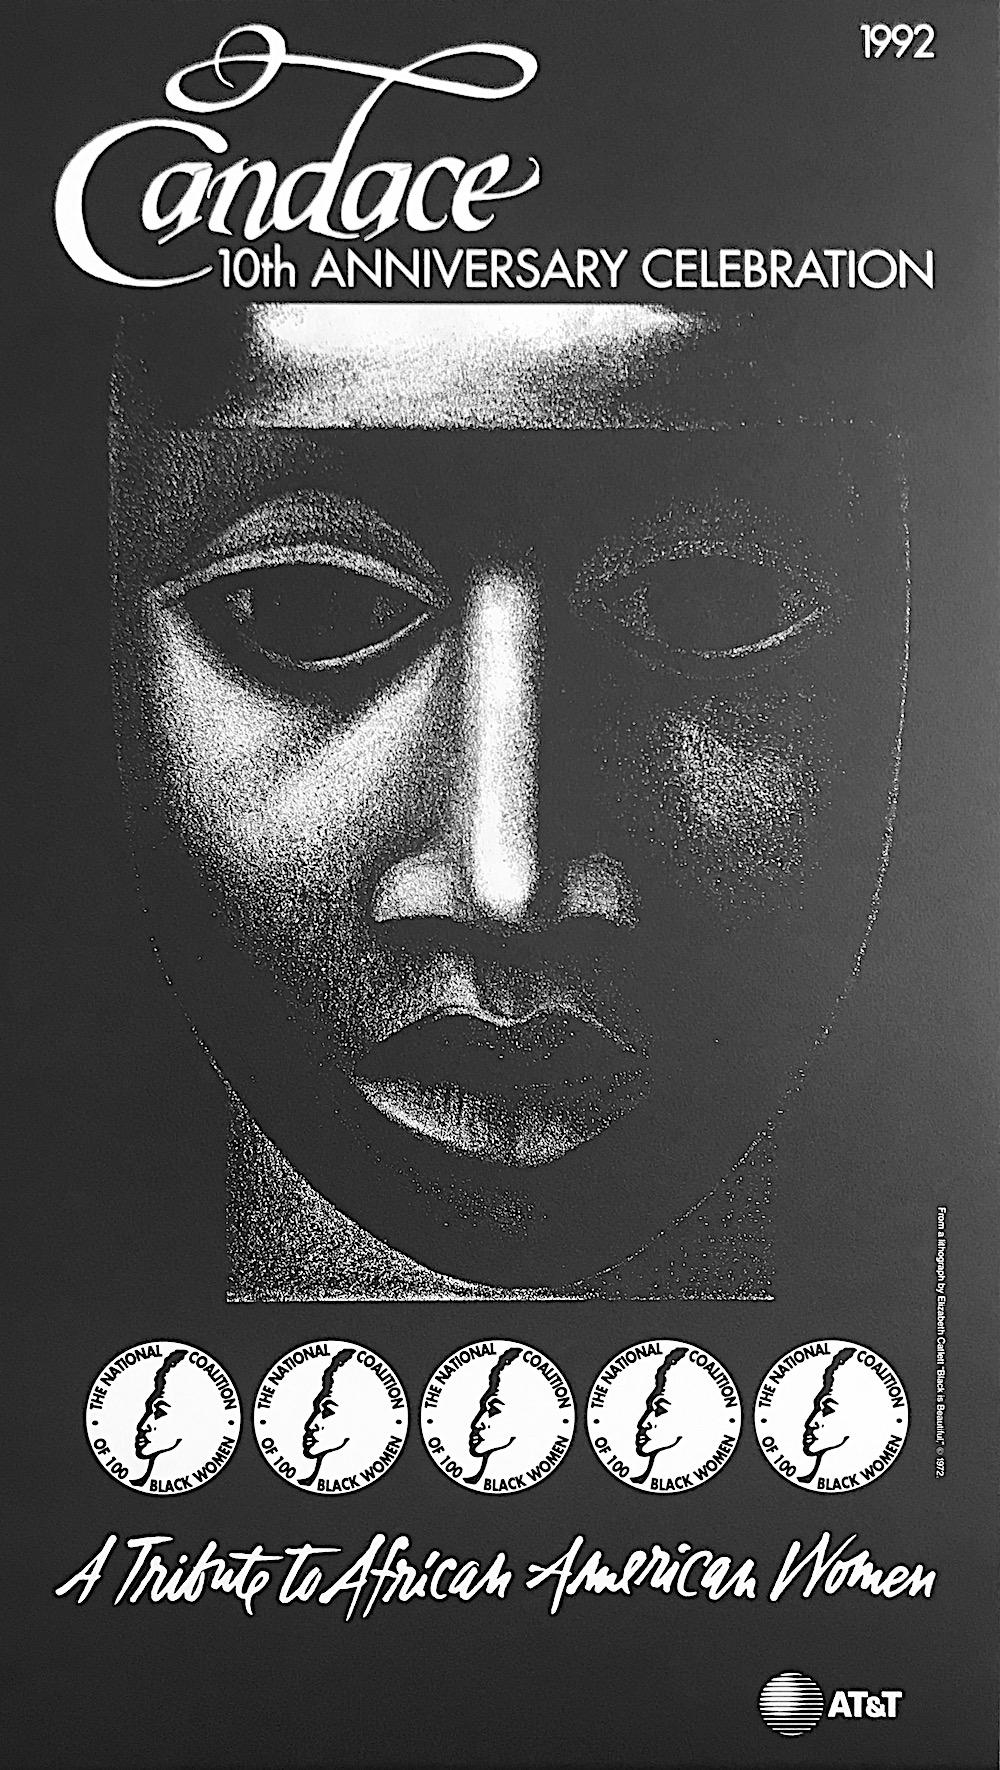 Elizabeth Catlett Portrait Print - CANDACE 1992 Tribute To African American Women, Black Woman Face Portrait 